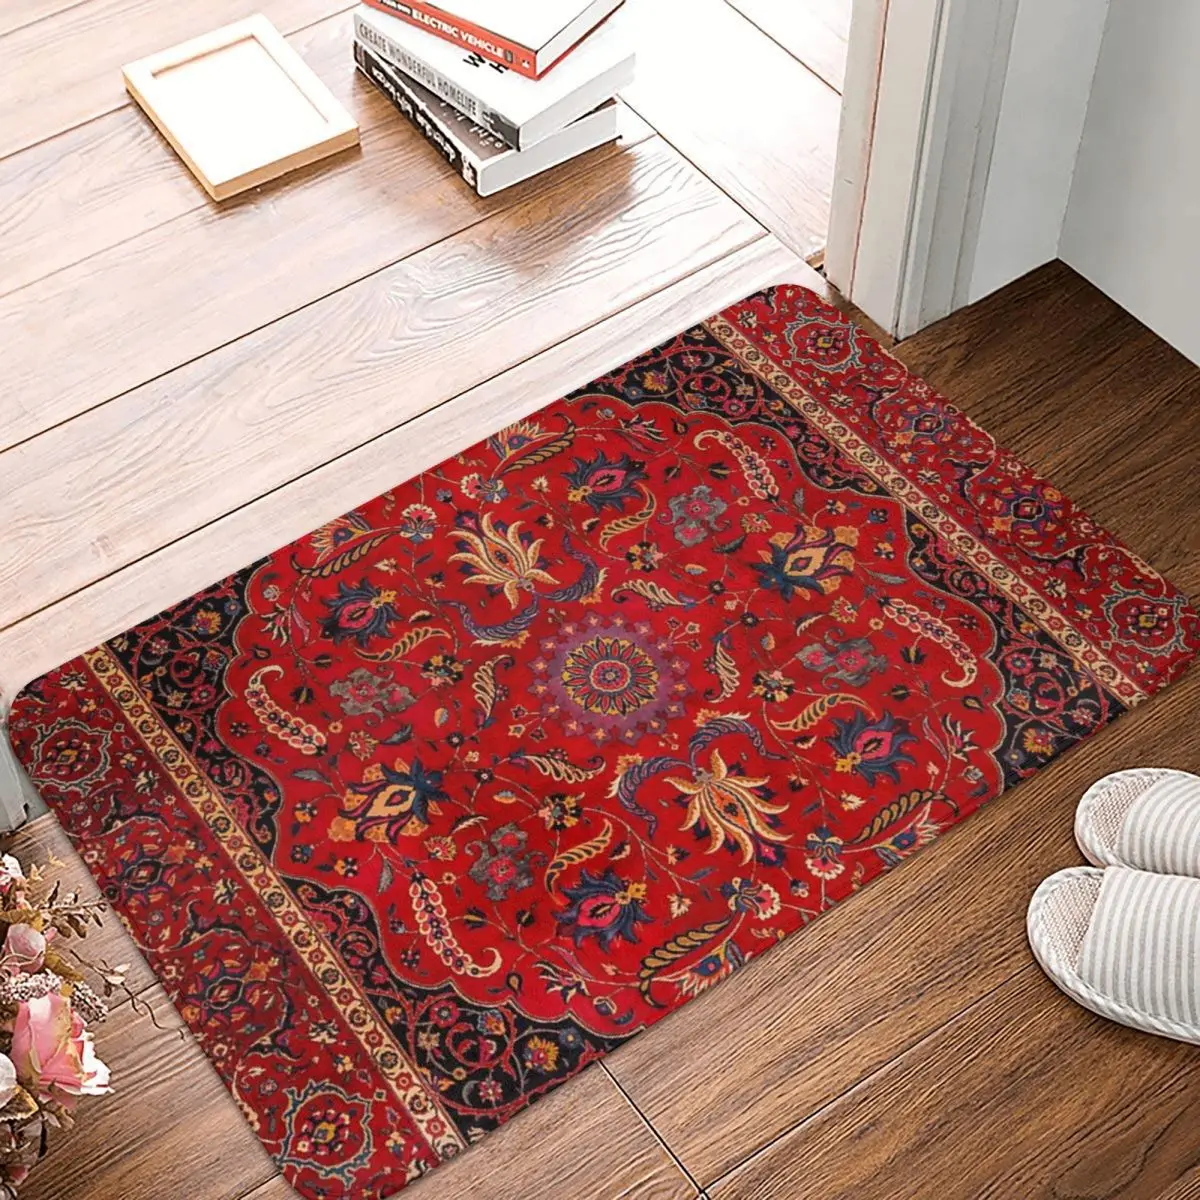 

Antique Persian Rug 60x40cm Carpet Polyester Floor Mats Holiday Doorway Festivle Gifts